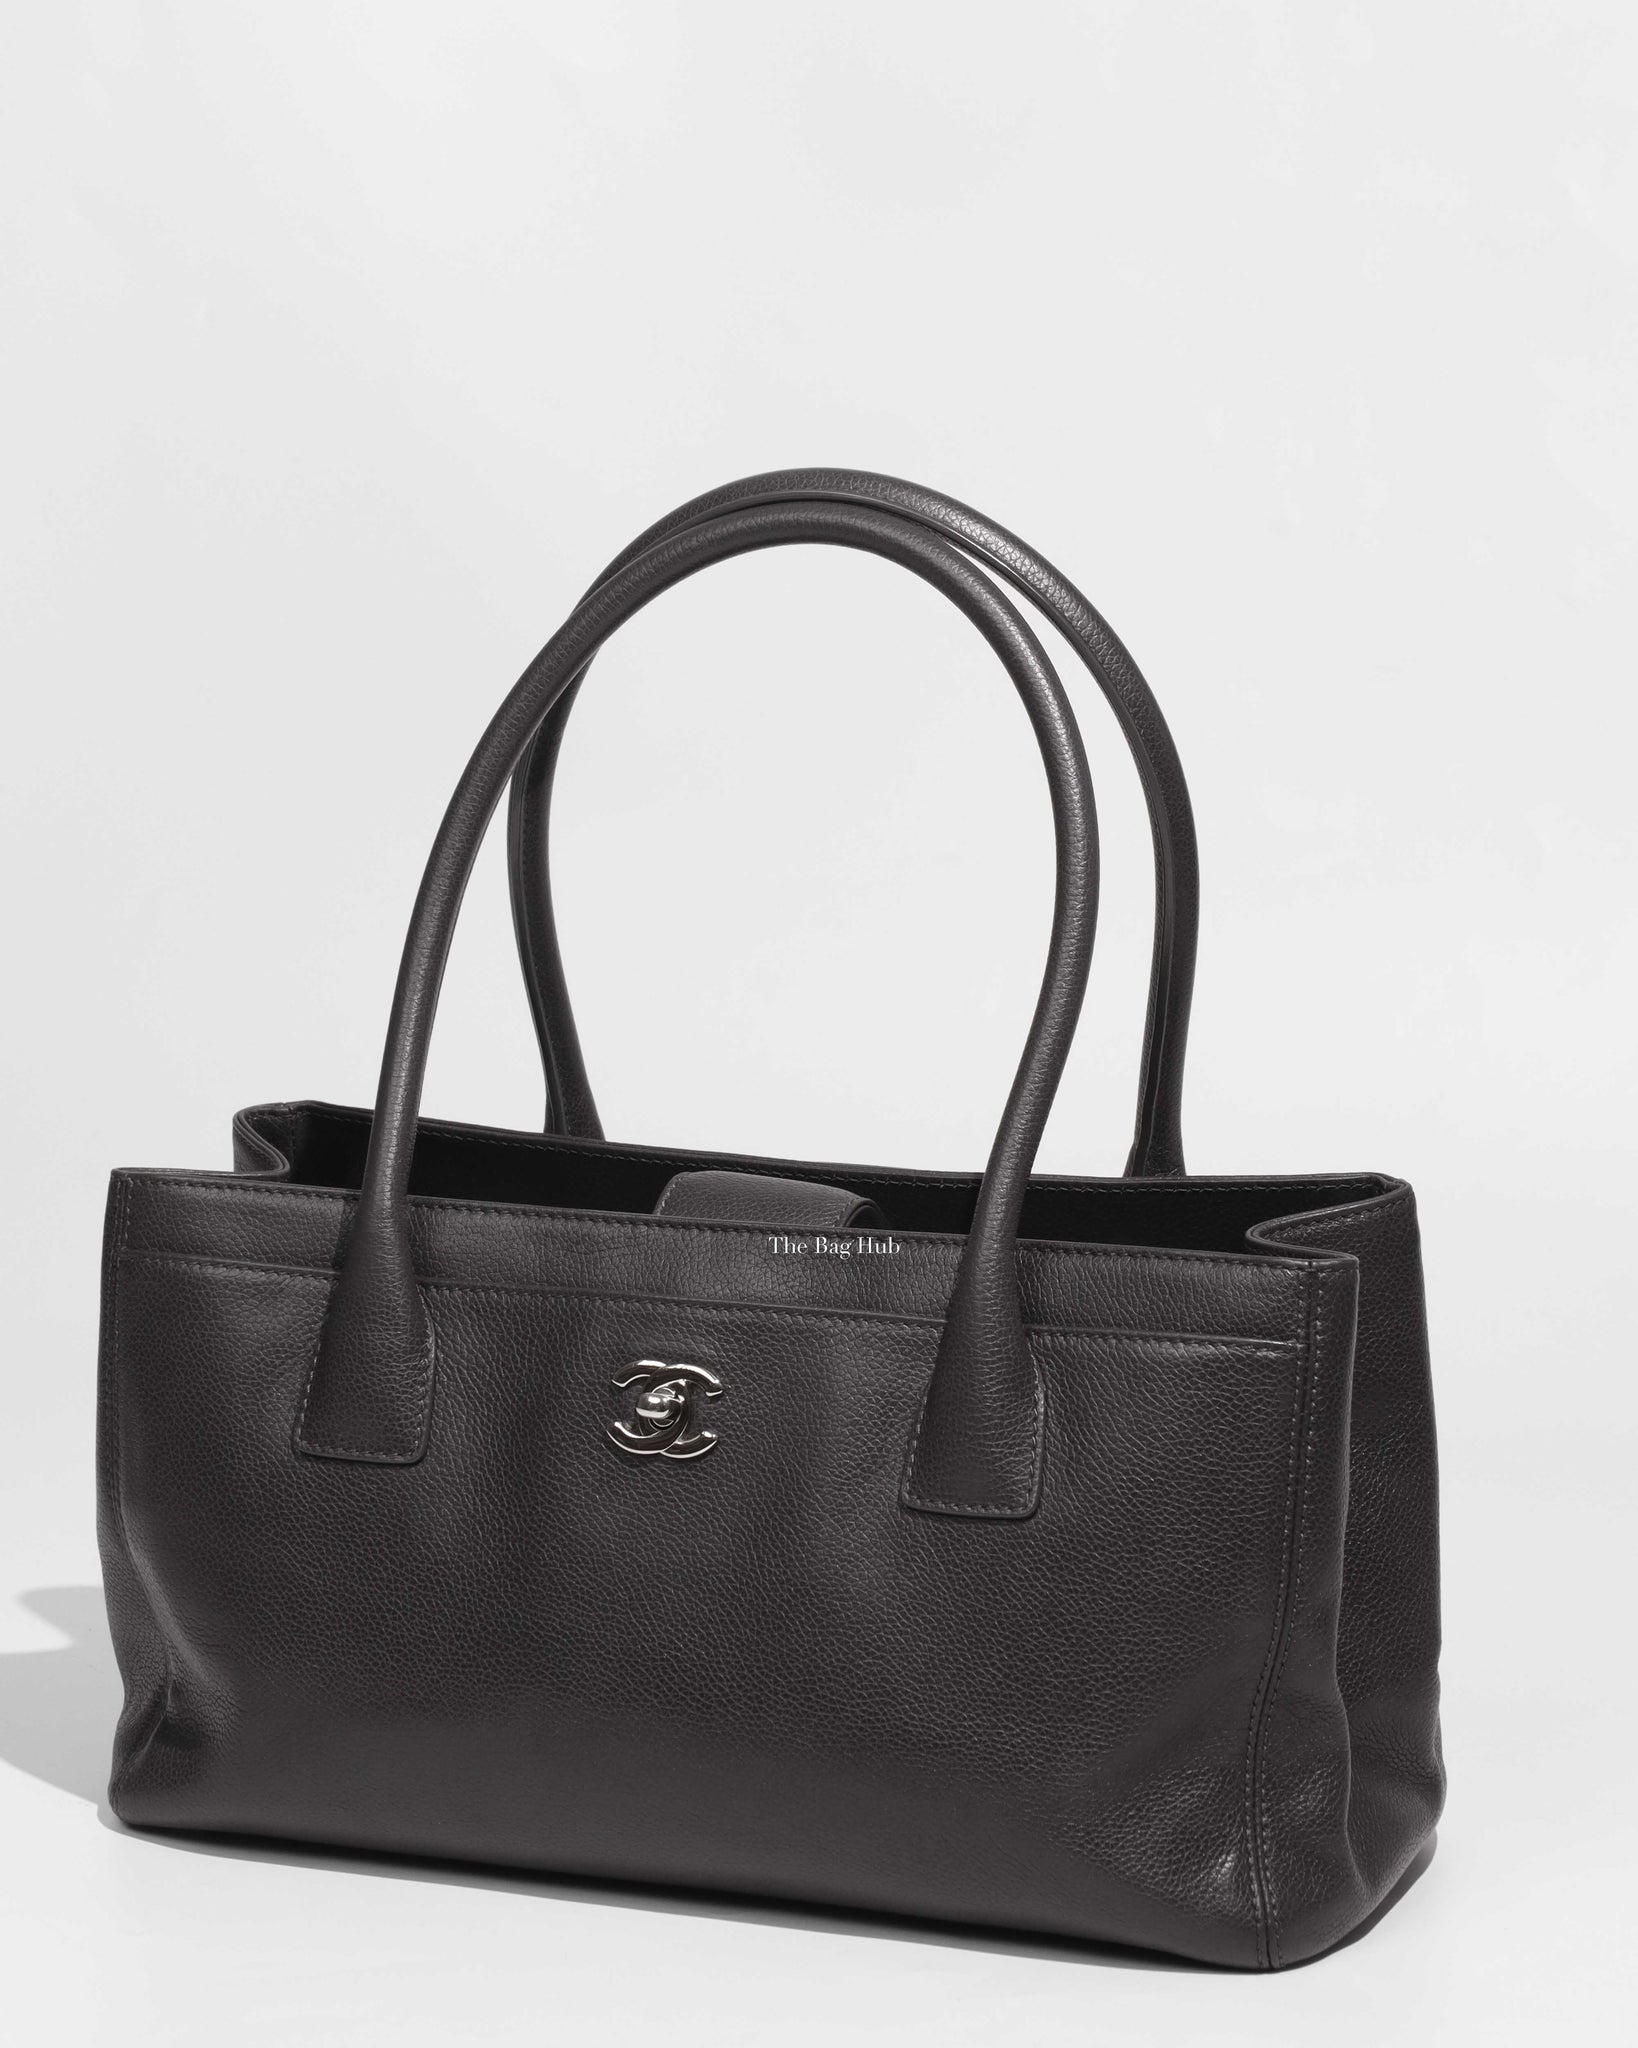 Chanel Dark Grey Small Cerf Tote Bag SHW, Designer Brand, Authentic Chanel